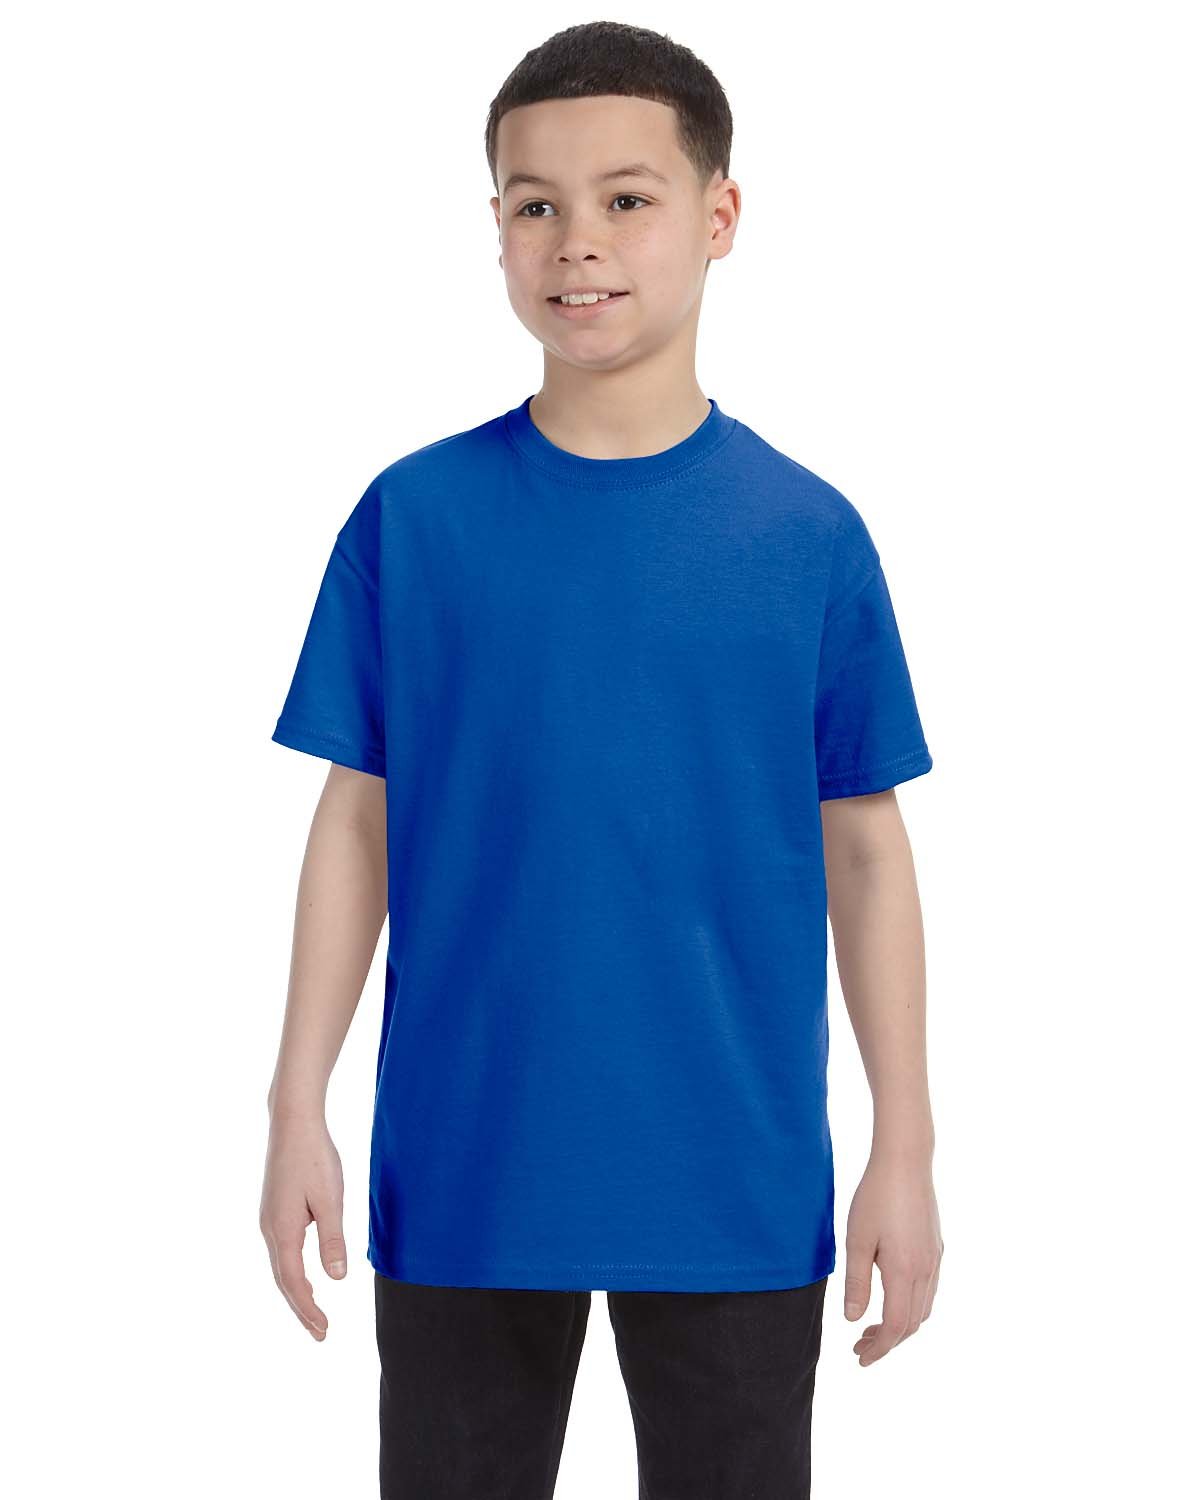 Gildan Youth Cotton Short Sleeve T-Shirt